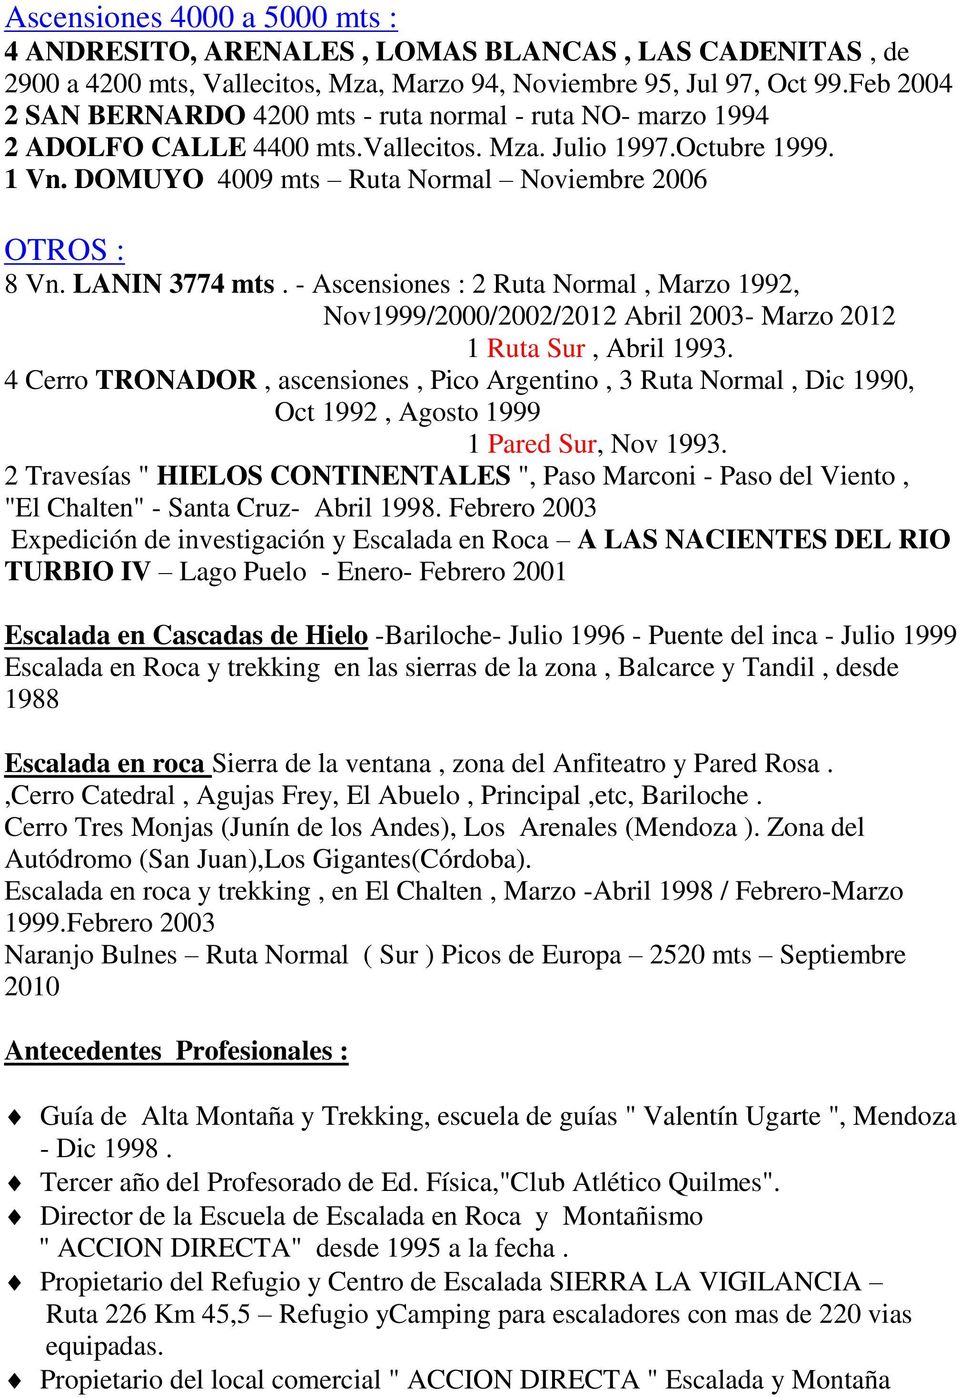 LANIN 3774 mts. - Ascensiones : 2 Ruta Normal, Marzo 1992, Nov1999/2000/2002/2012 Abril 2003- Marzo 2012 1 Ruta Sur, Abril 1993.